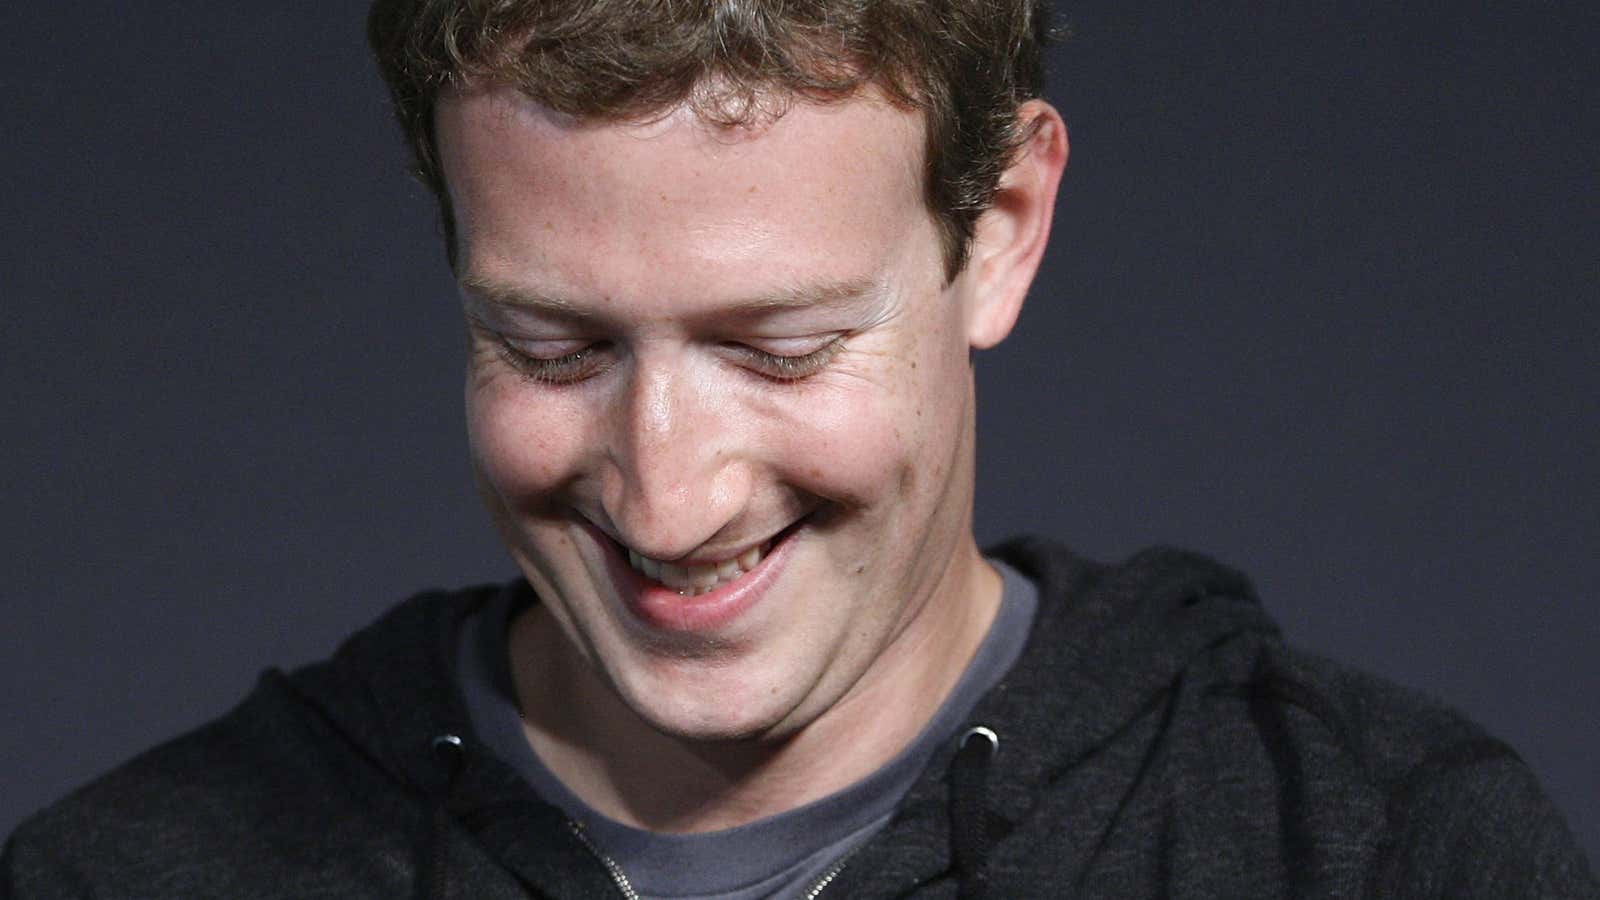 Mark Zuckerberg smiles eerily.